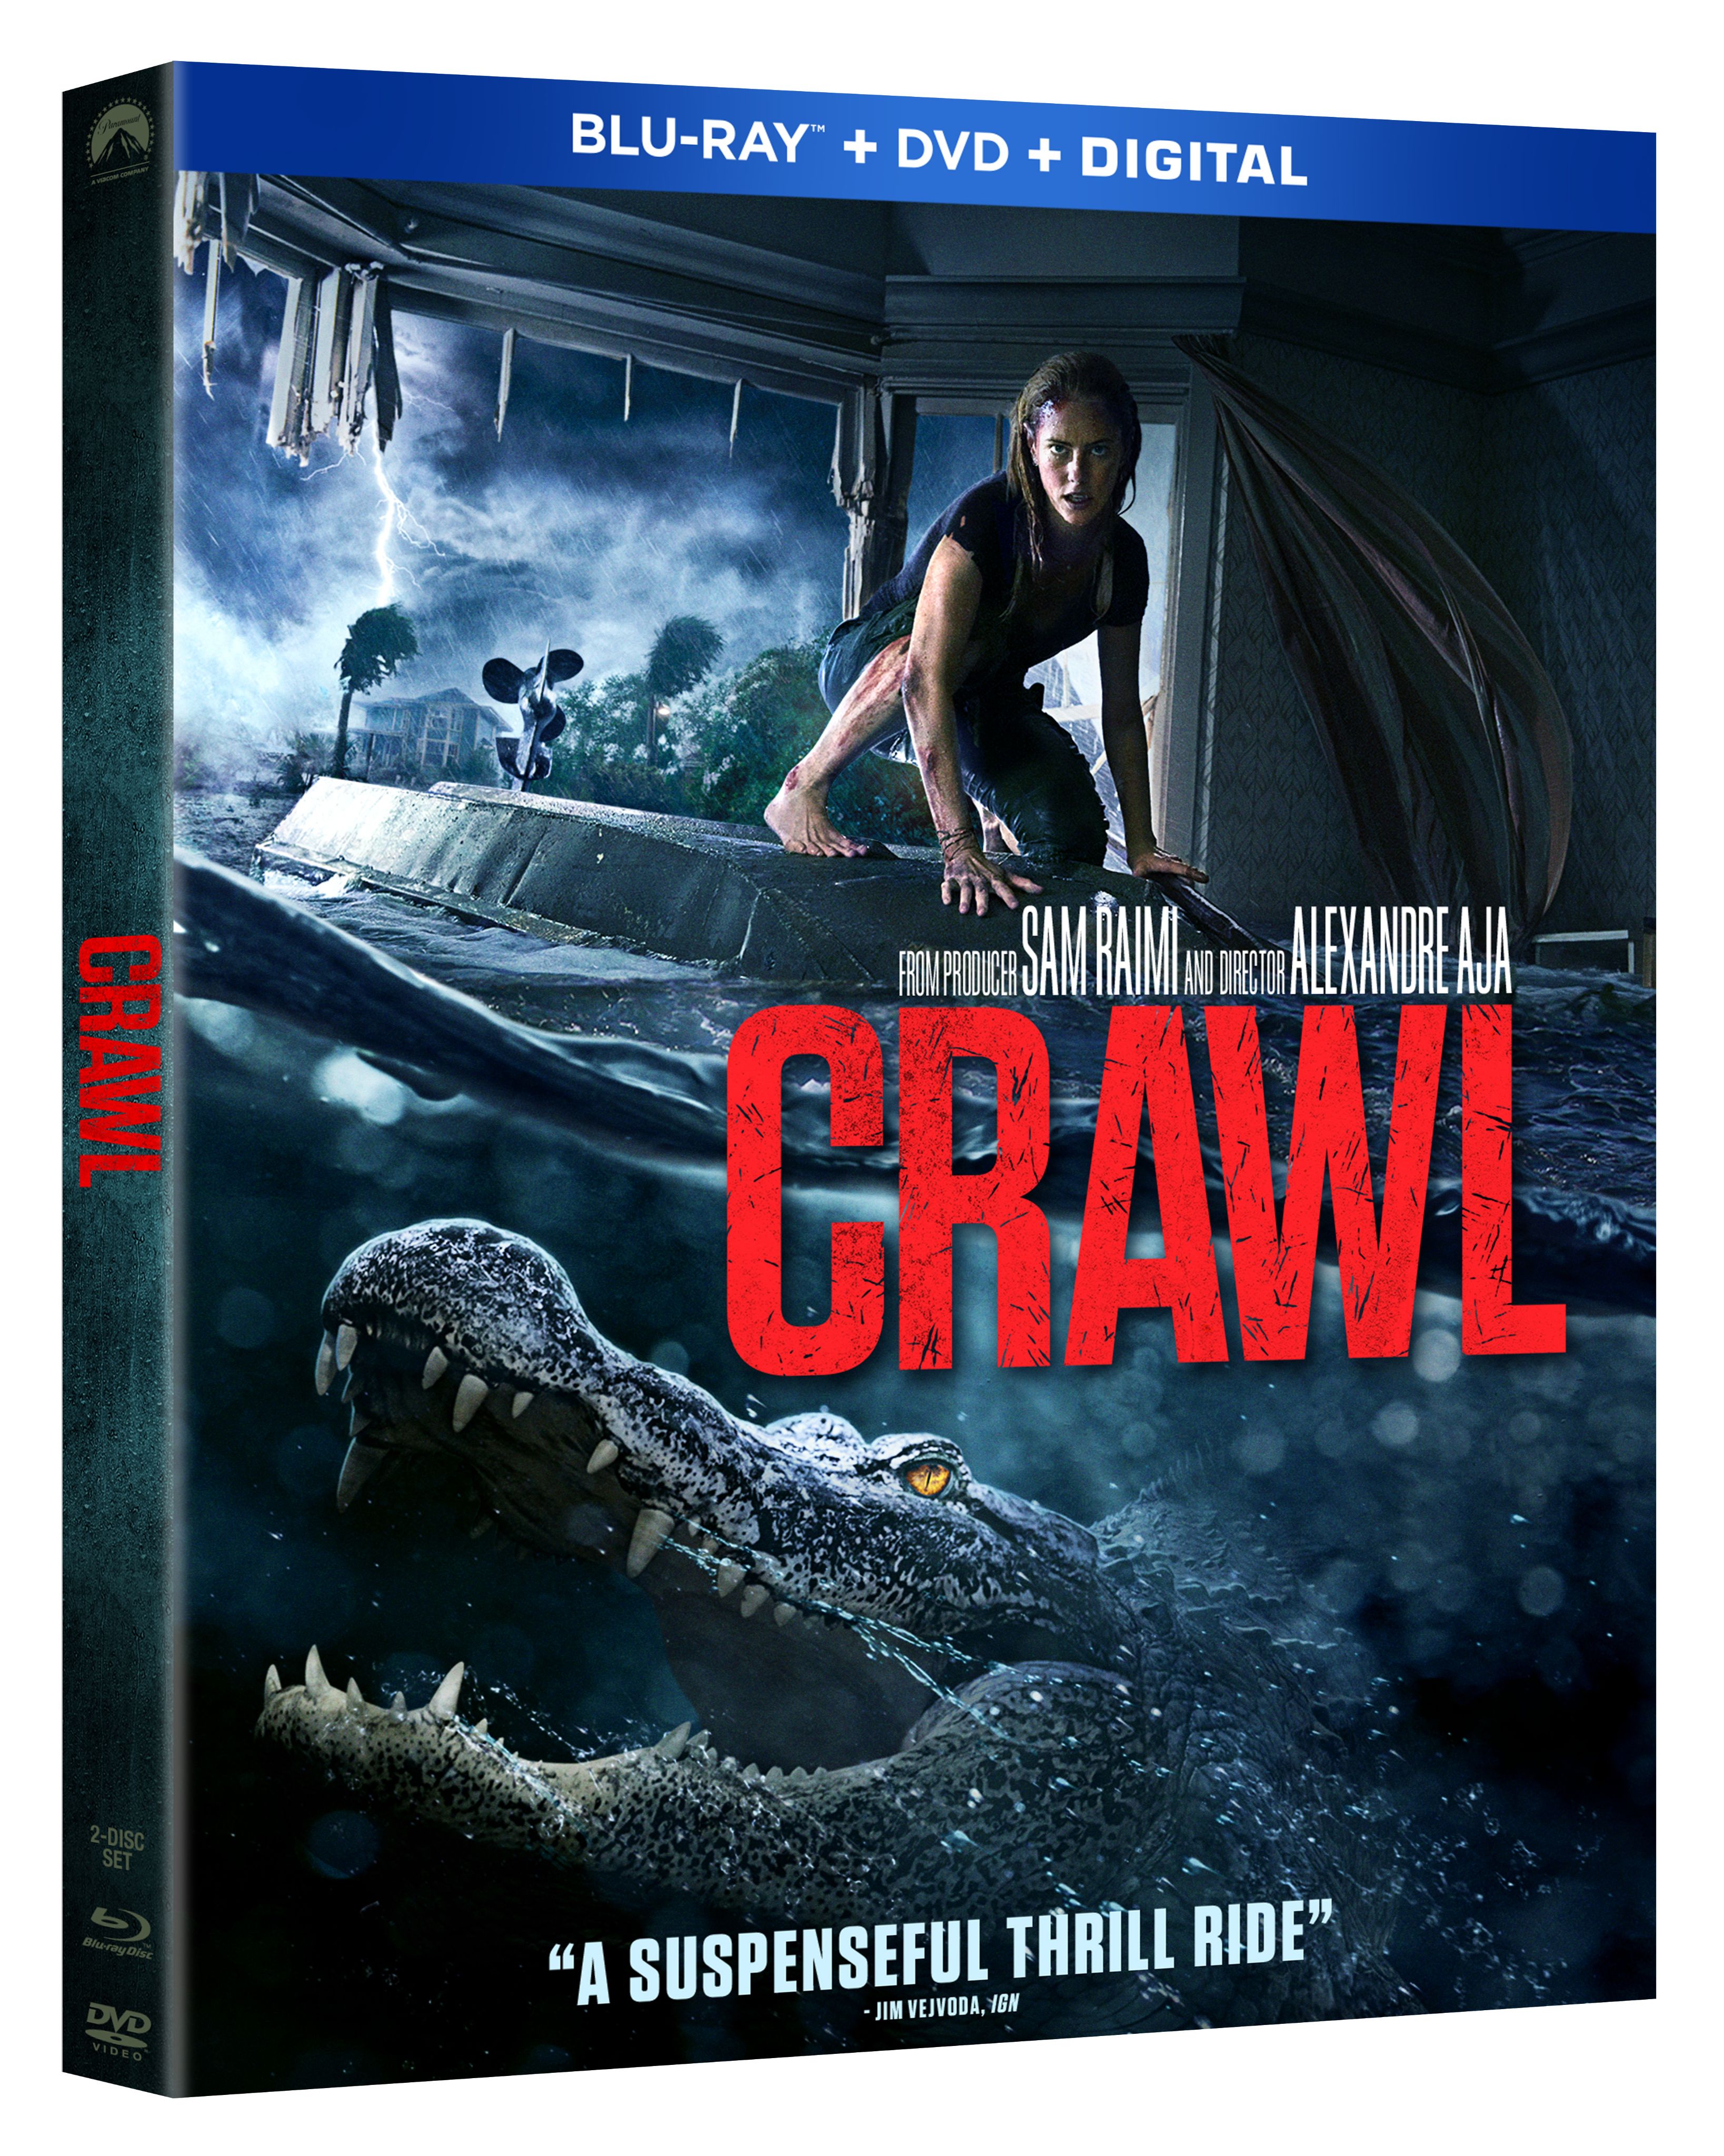 Crawl blu-ray cover 2